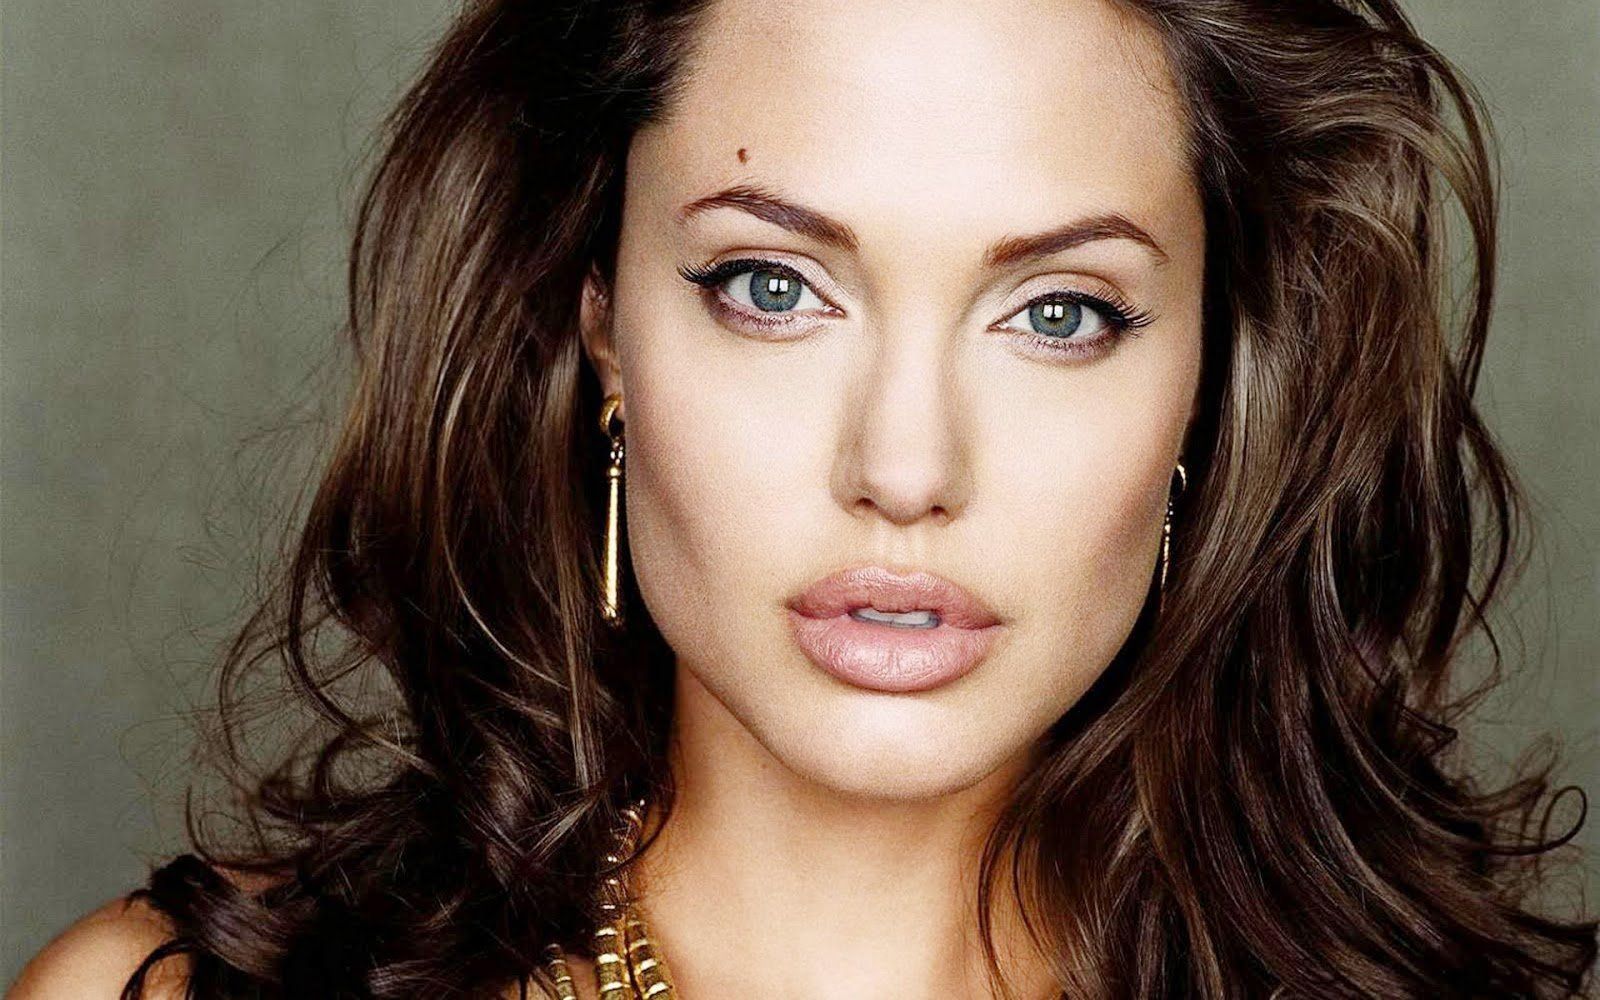 Angelina jolie hot looking face wallpaper Angelina jolie hot ...